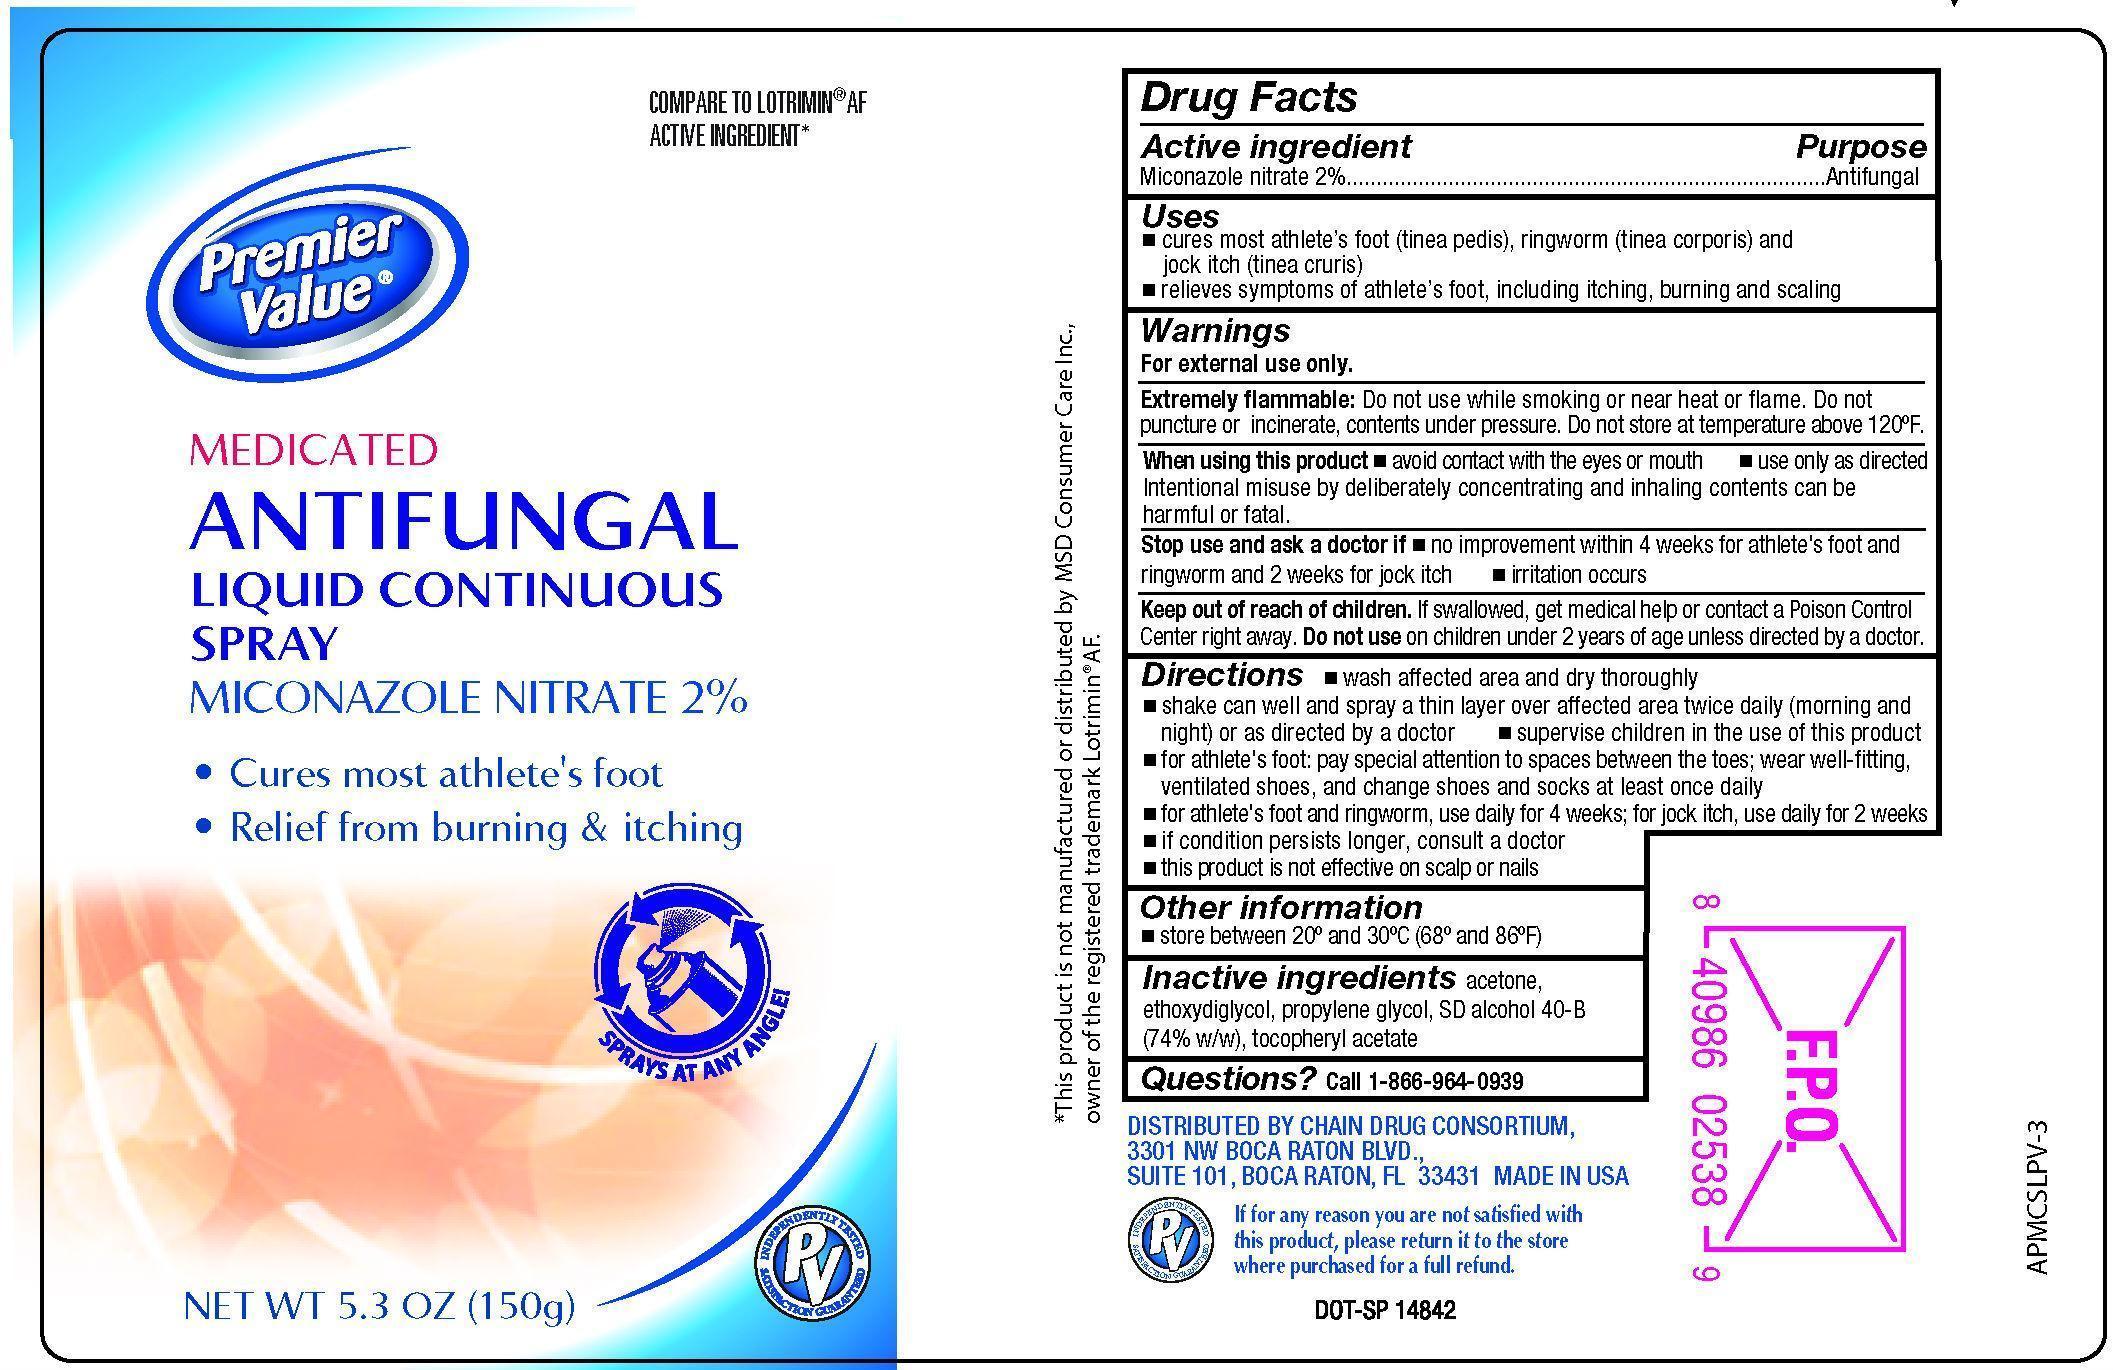 PV Antifngl Mic Nitrate LiqSpry-3.jpg